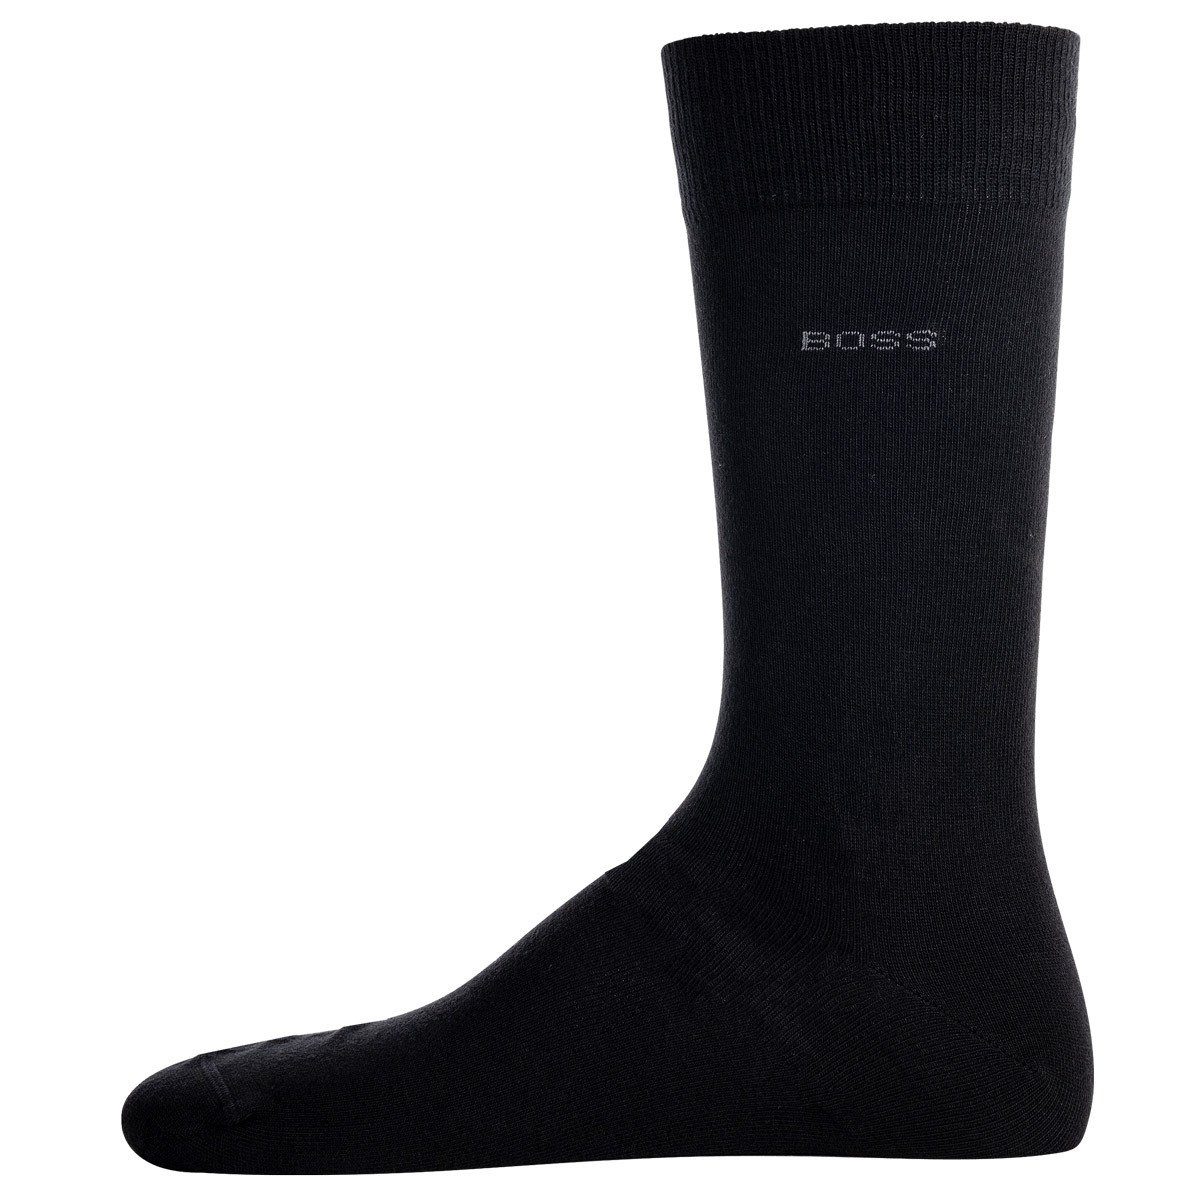 Wäsche/Bademode Socken BOSS Kurzsocken Herren Socken, 1 Paar - Marc RS Uni CC,